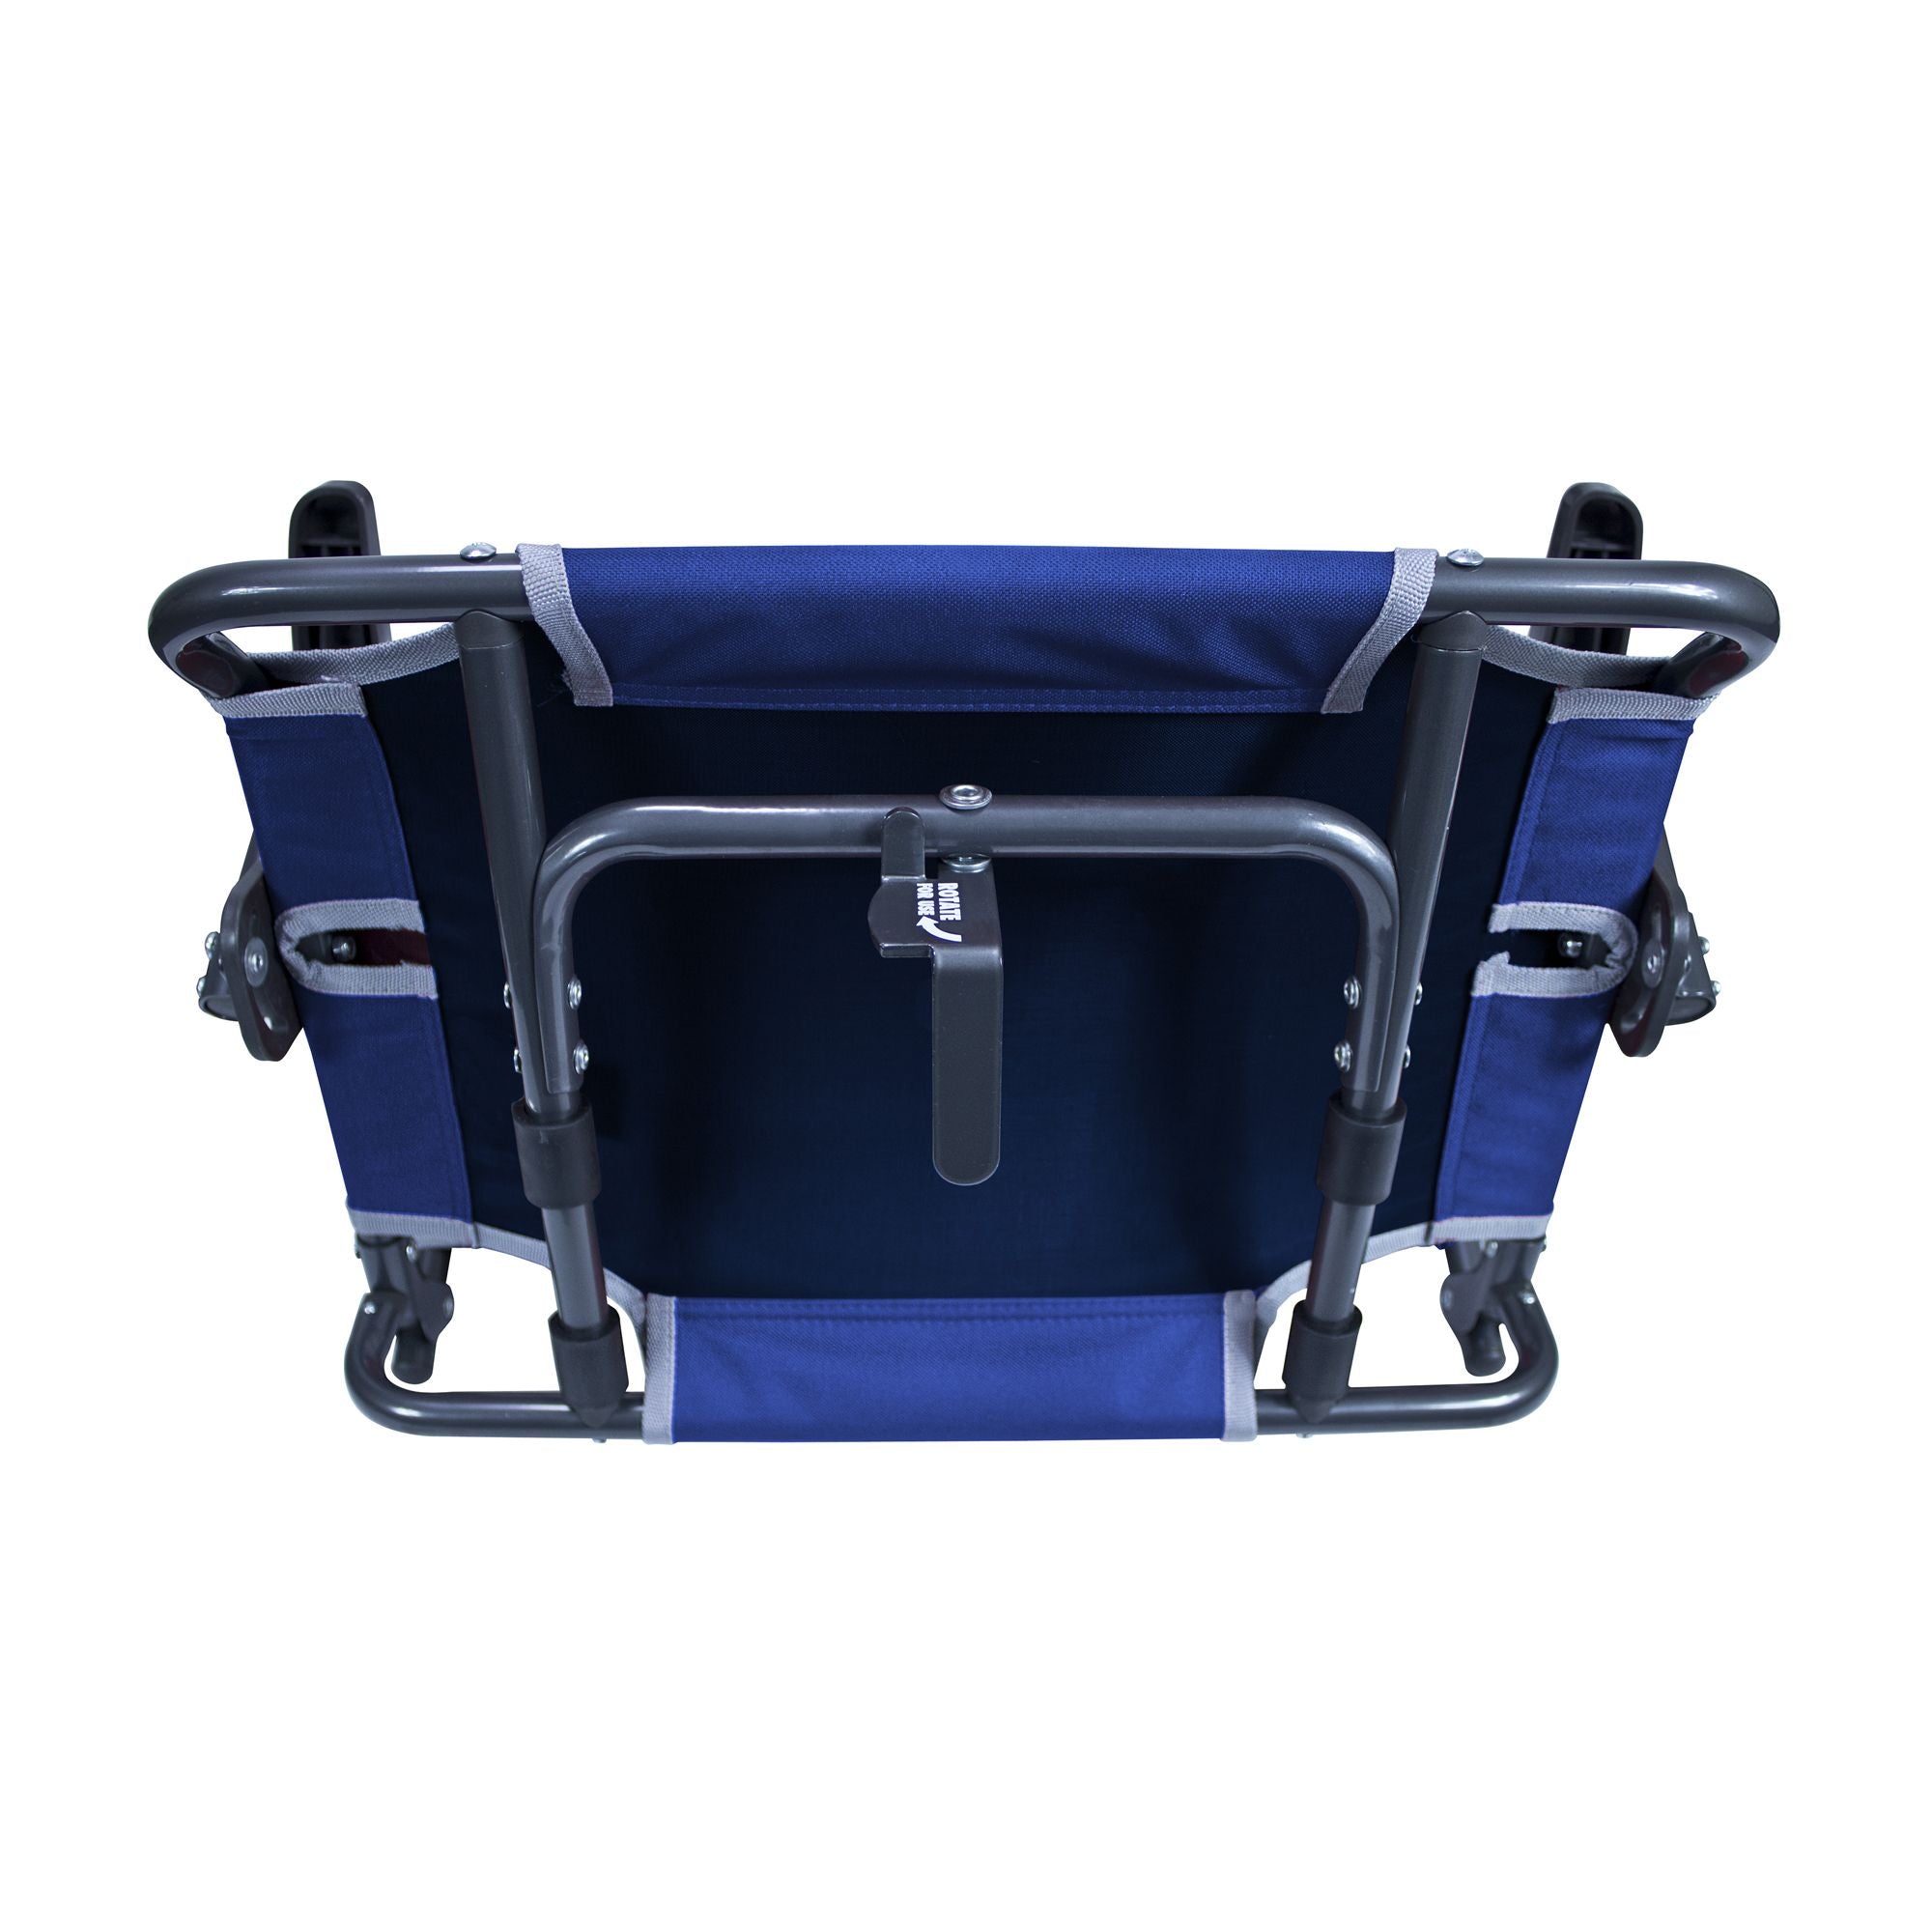 Big Comfort Stadium Chair with Armrests, Royal Blue, L Hook